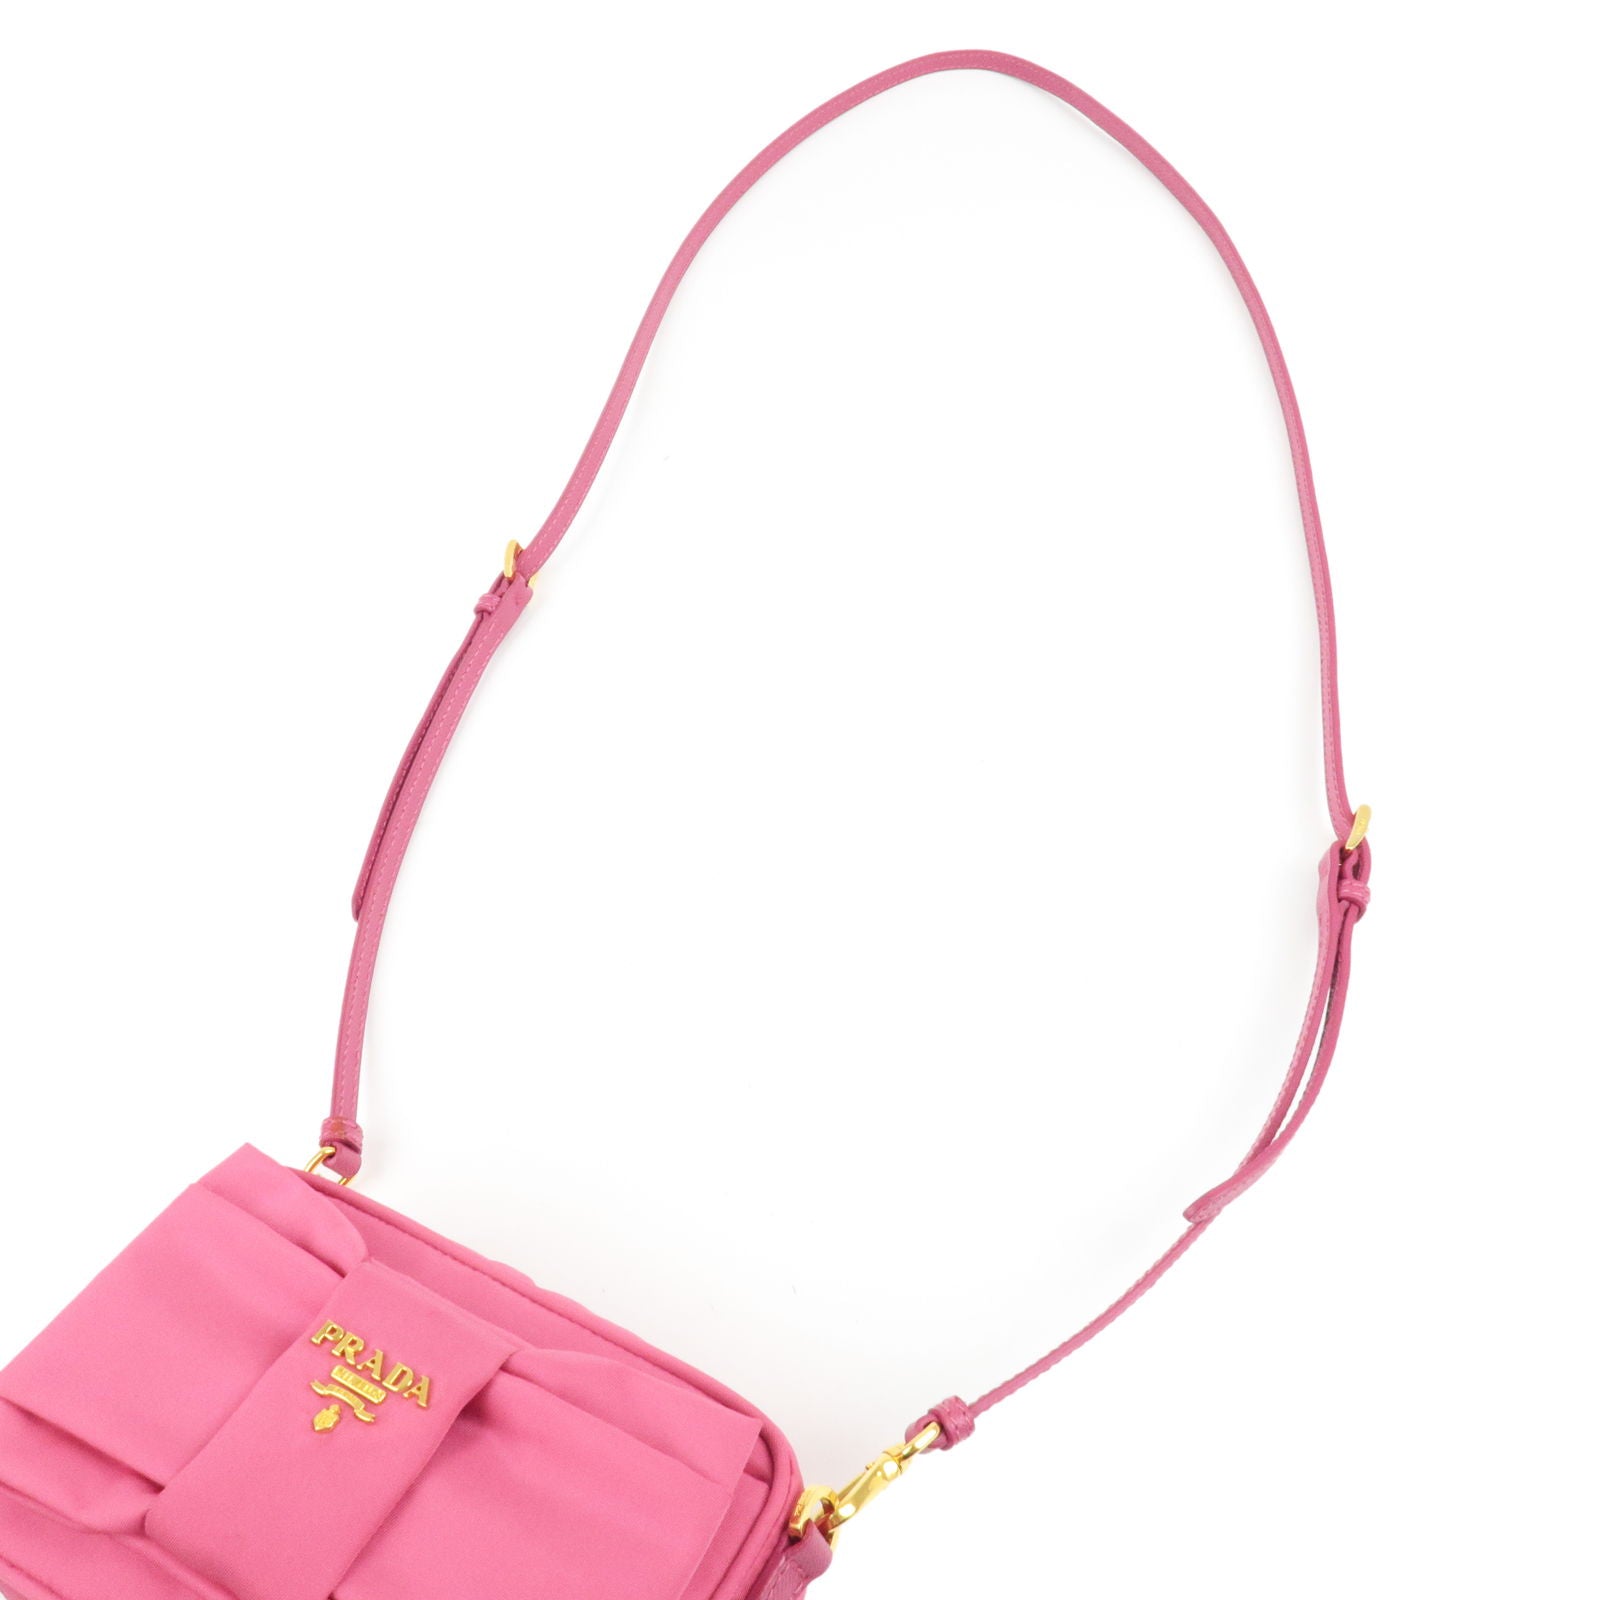 Vintage Pink Prada Crossbody Bag